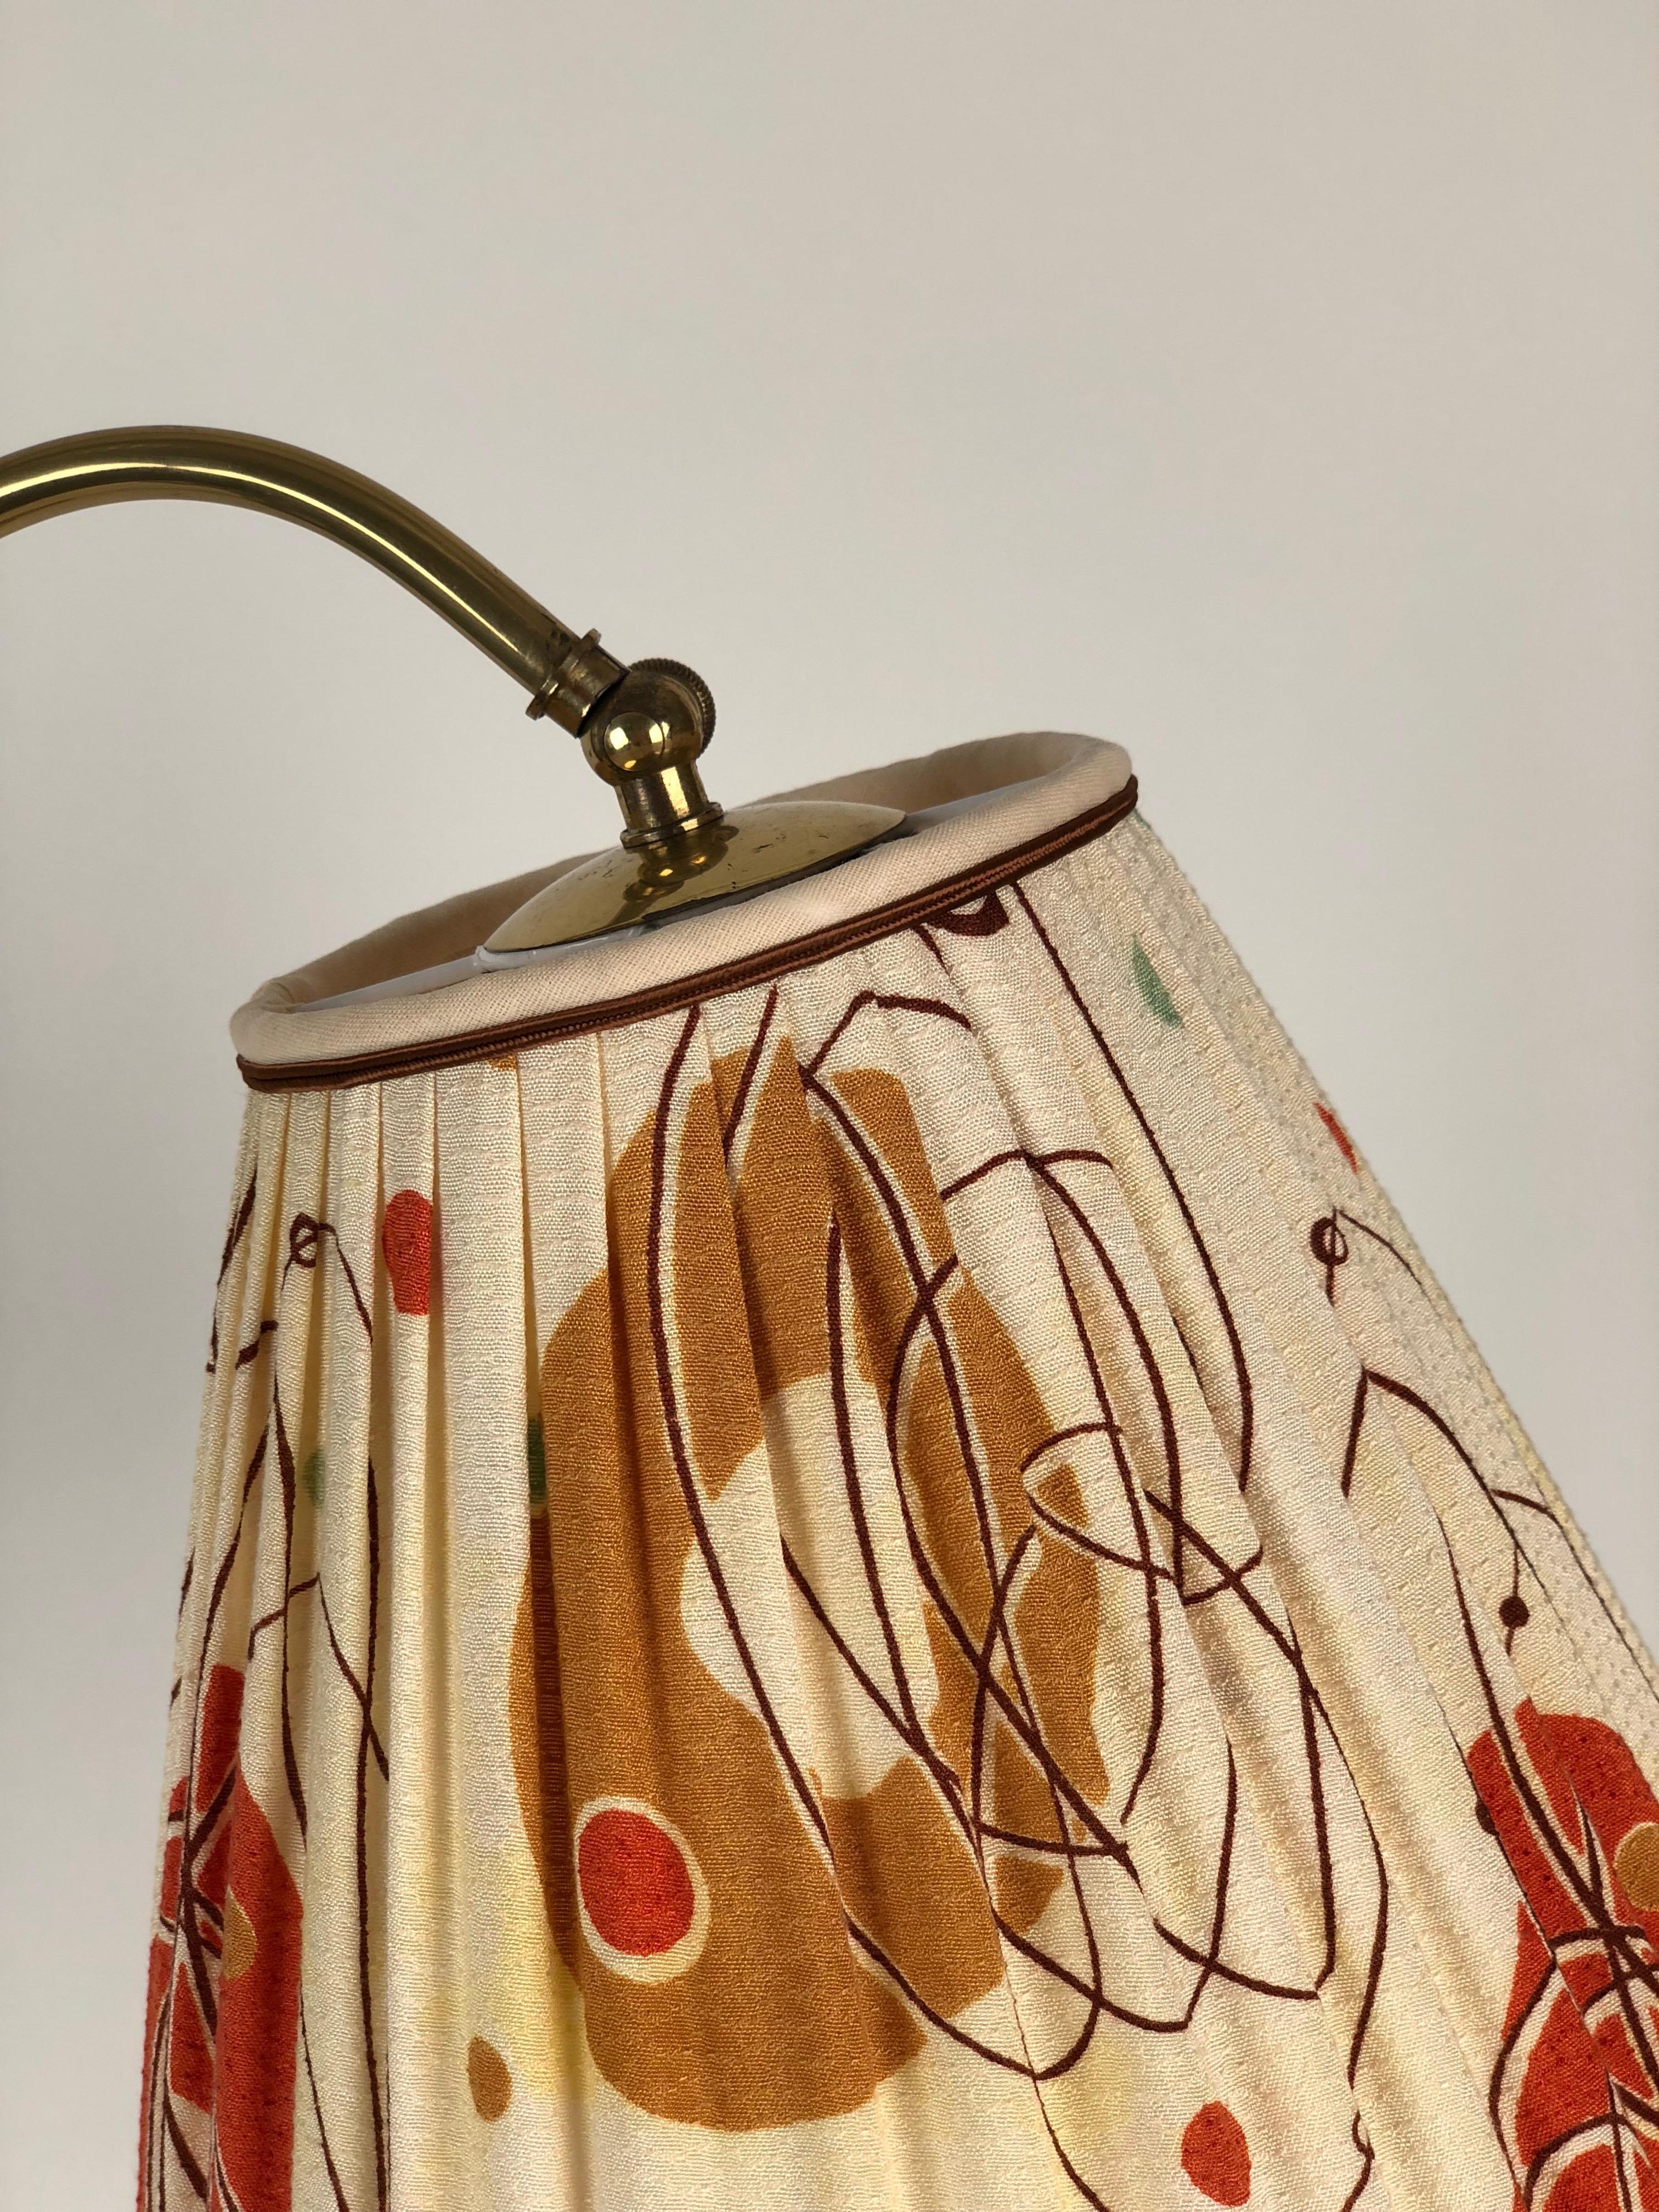 Austrian Mid-Century Modern Brass Floor Lamp, Produced by Rupert Nikoll, Austria, 1950s For Sale